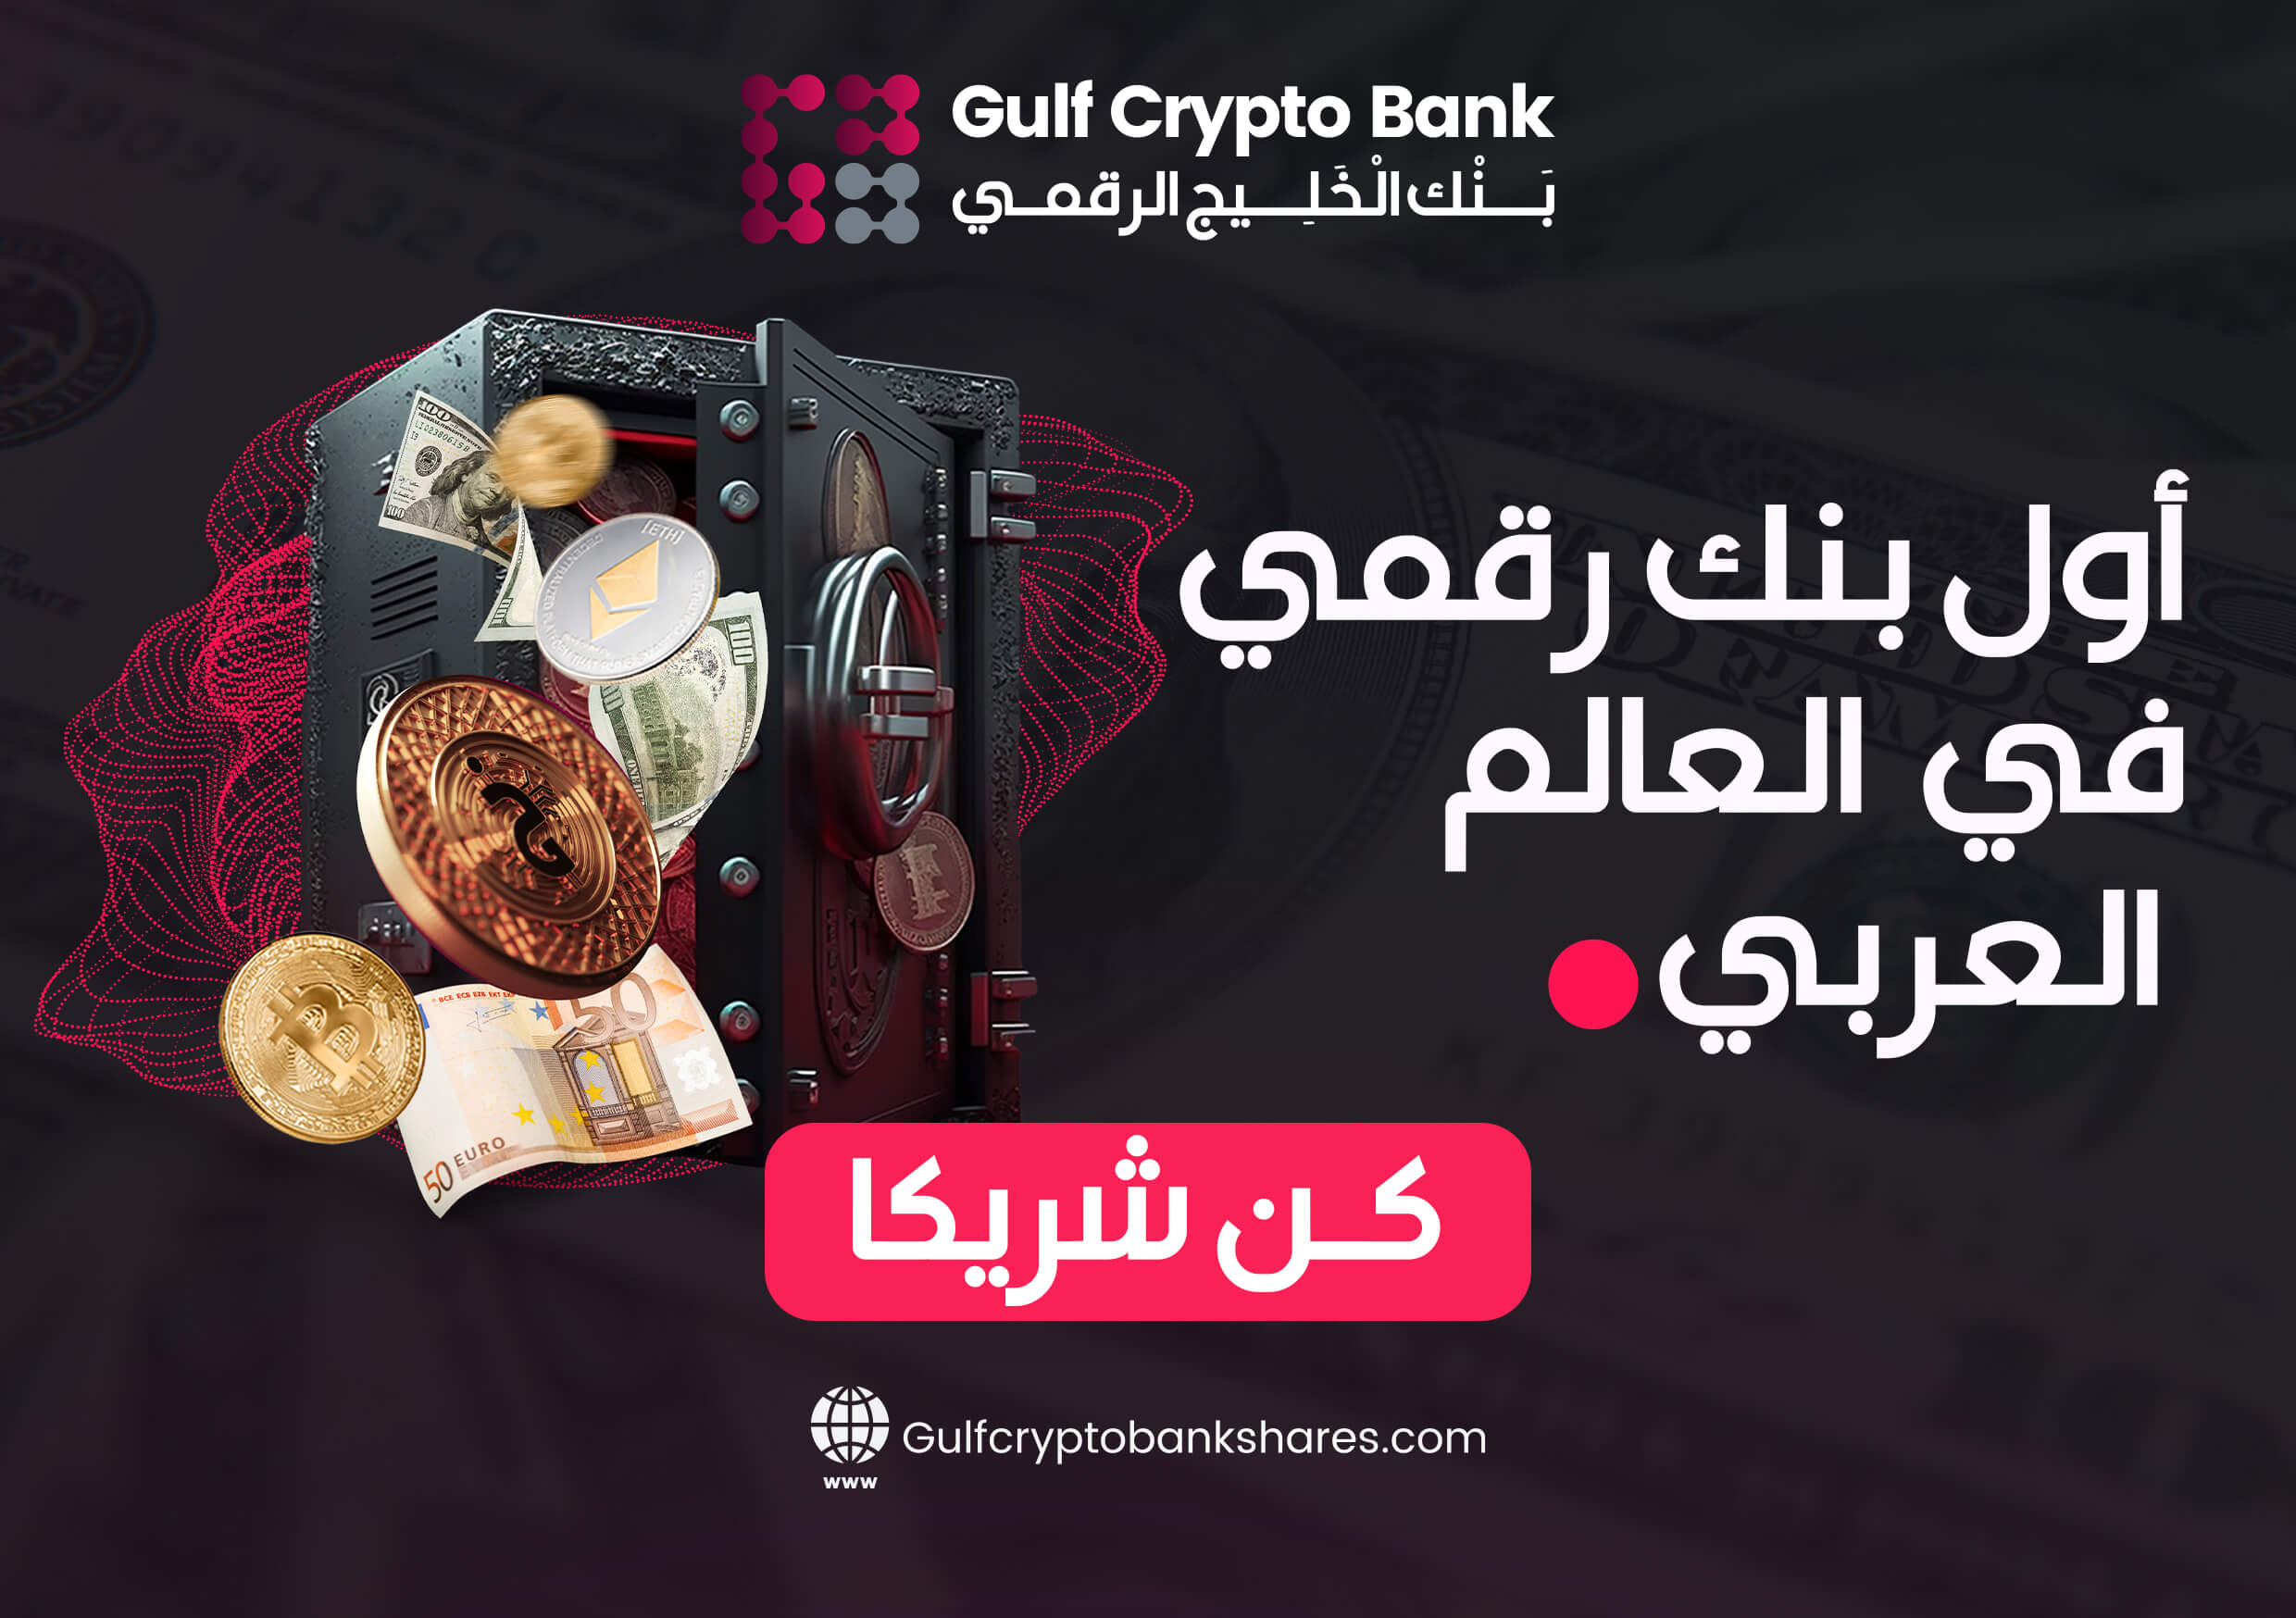 Gulf Crypto Bank